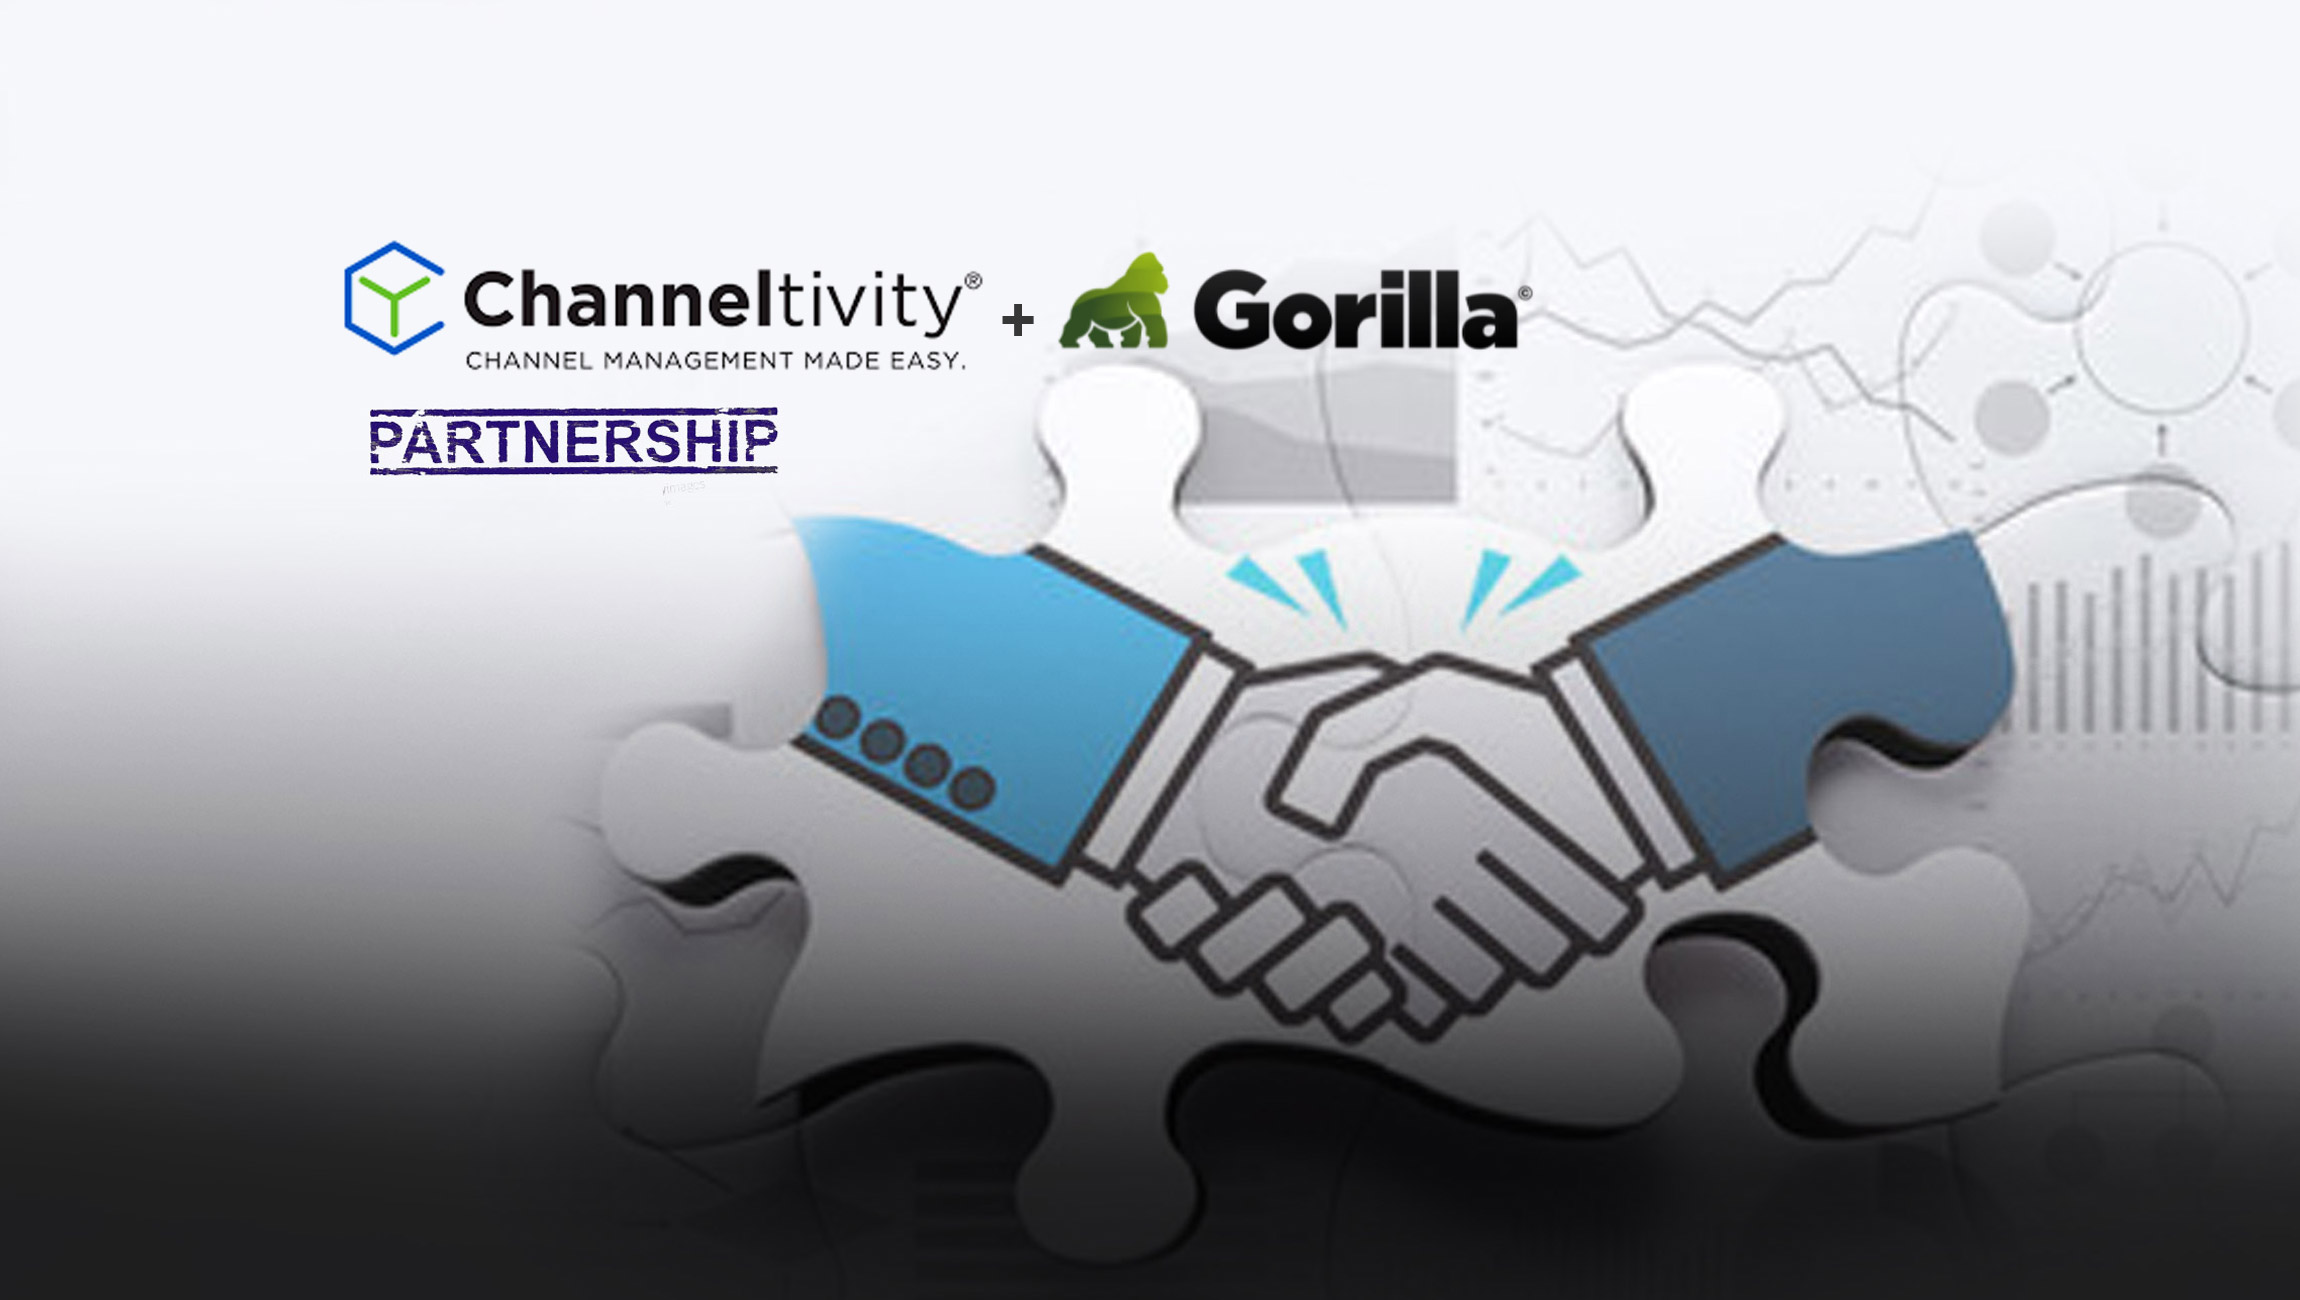 Channeltivity and Gorilla Corporation Announce Partnership